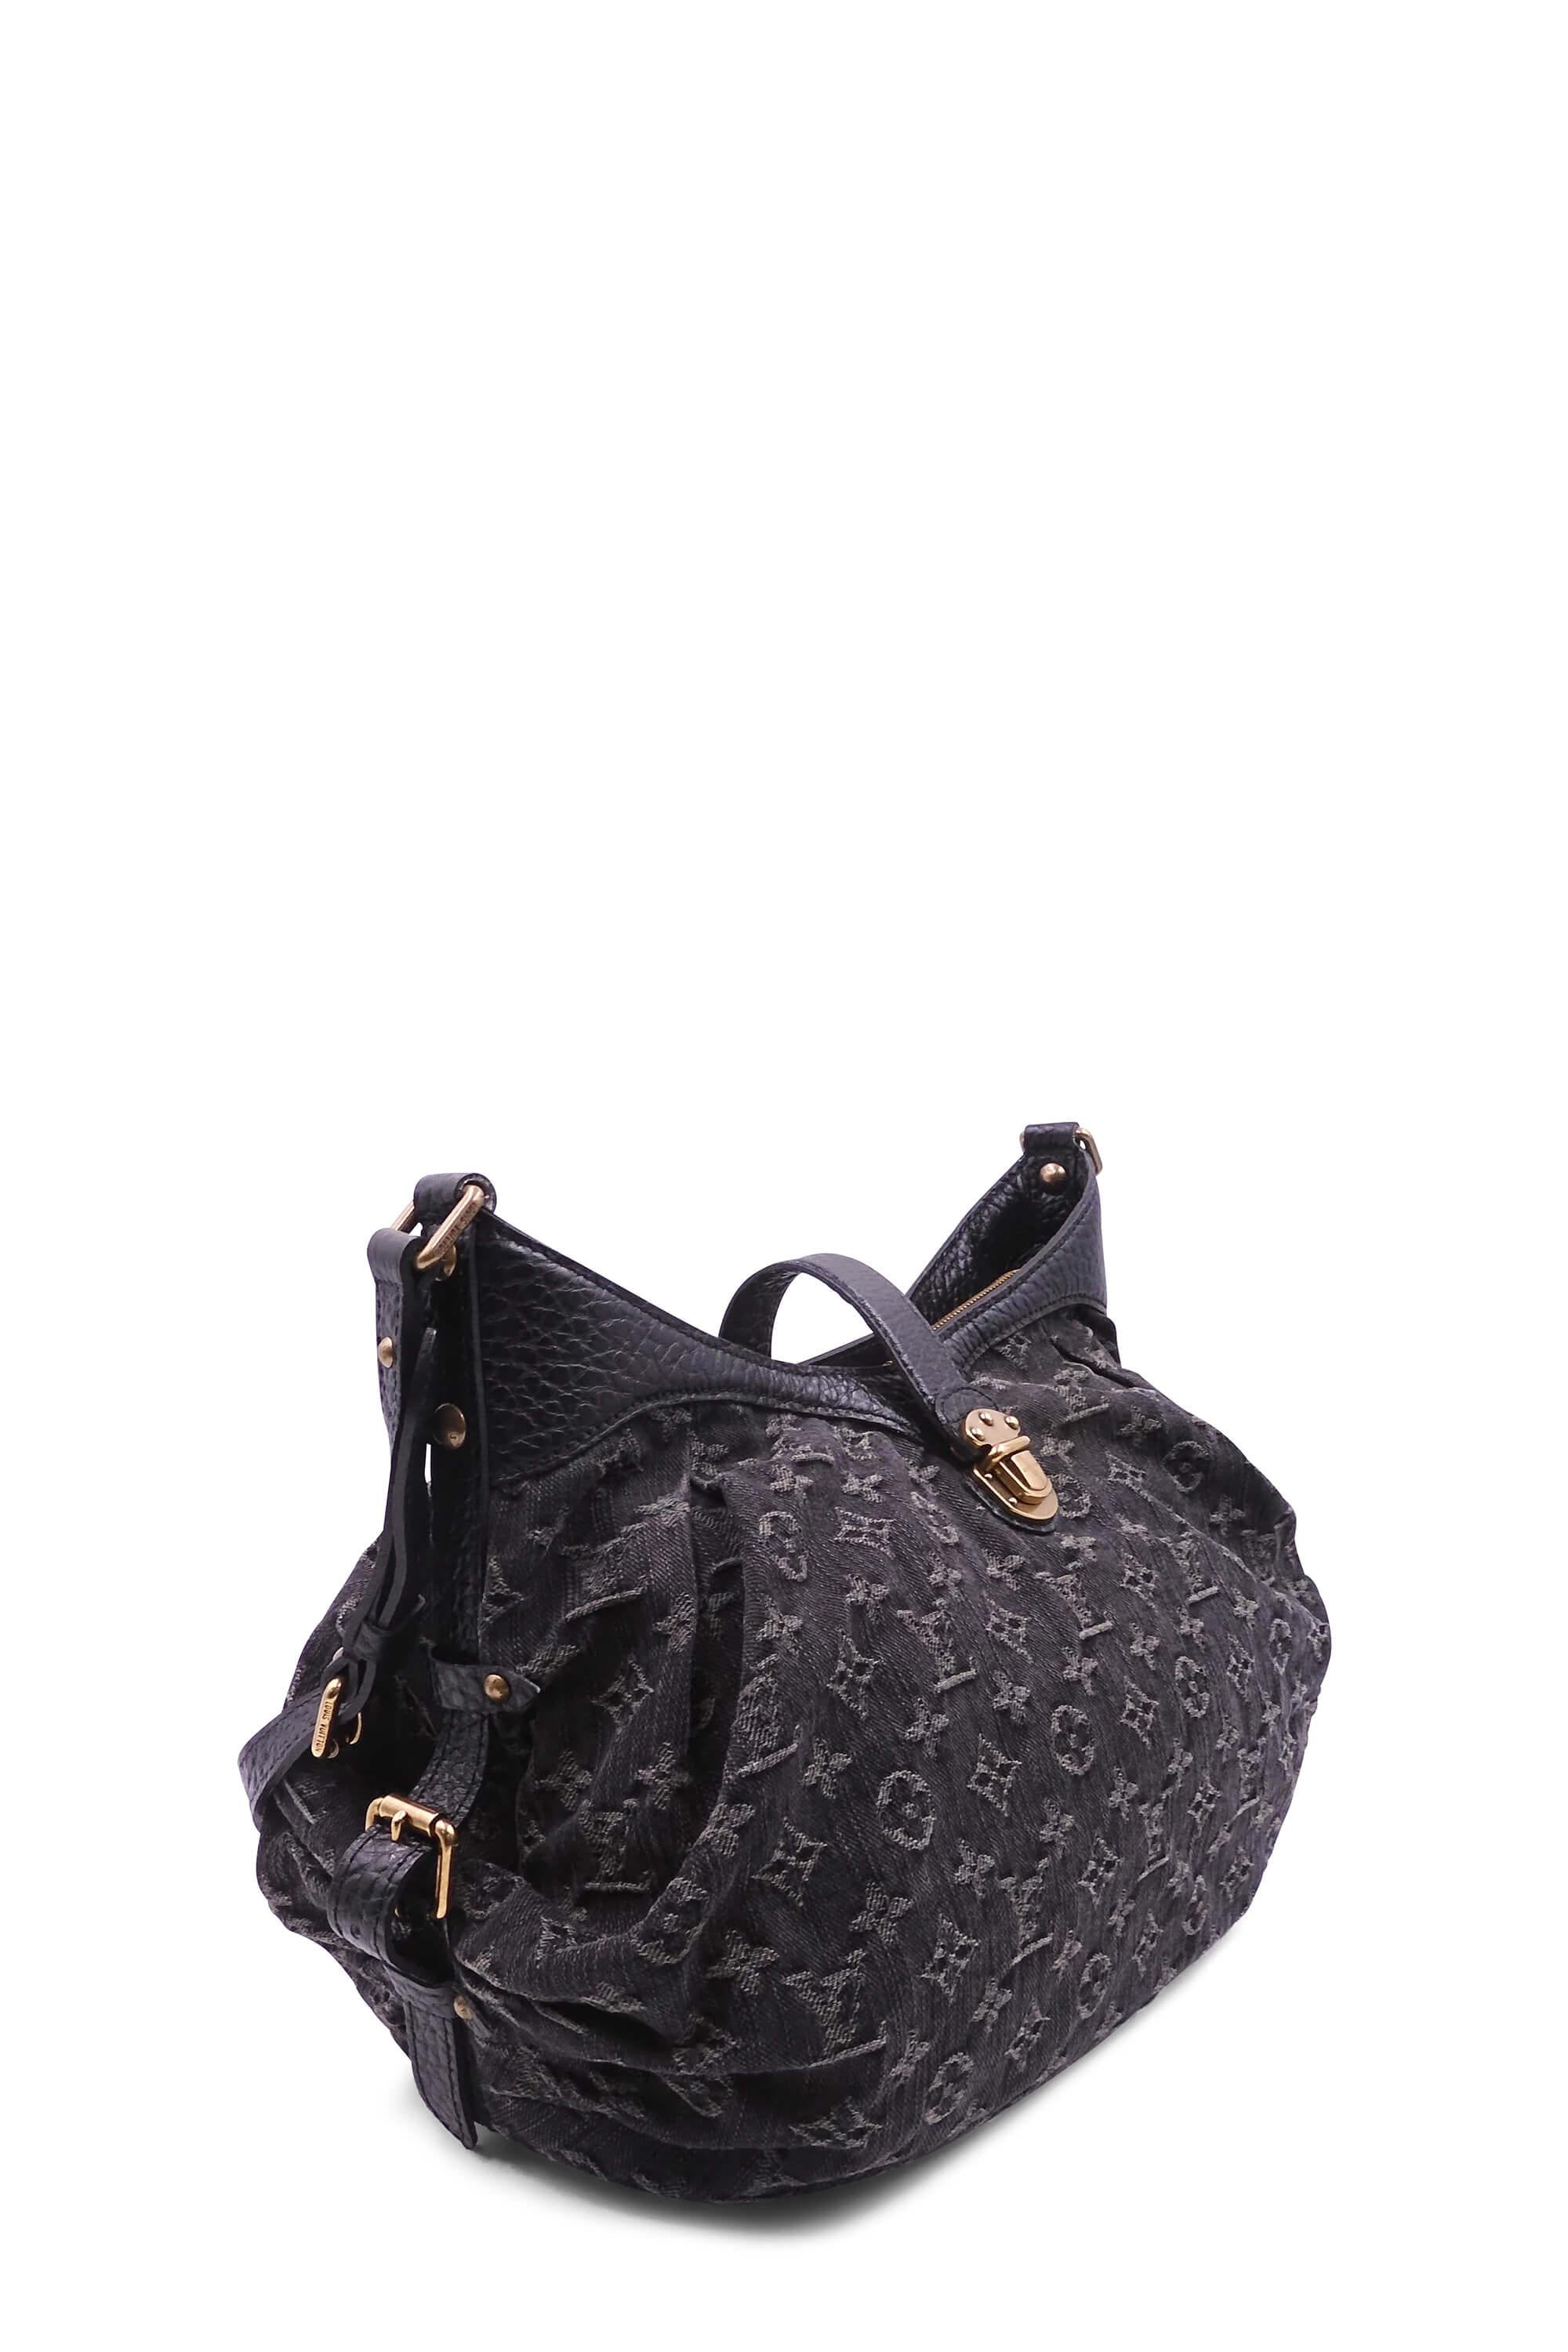 Louis Vuitton Black Denim Mahina XS Bag